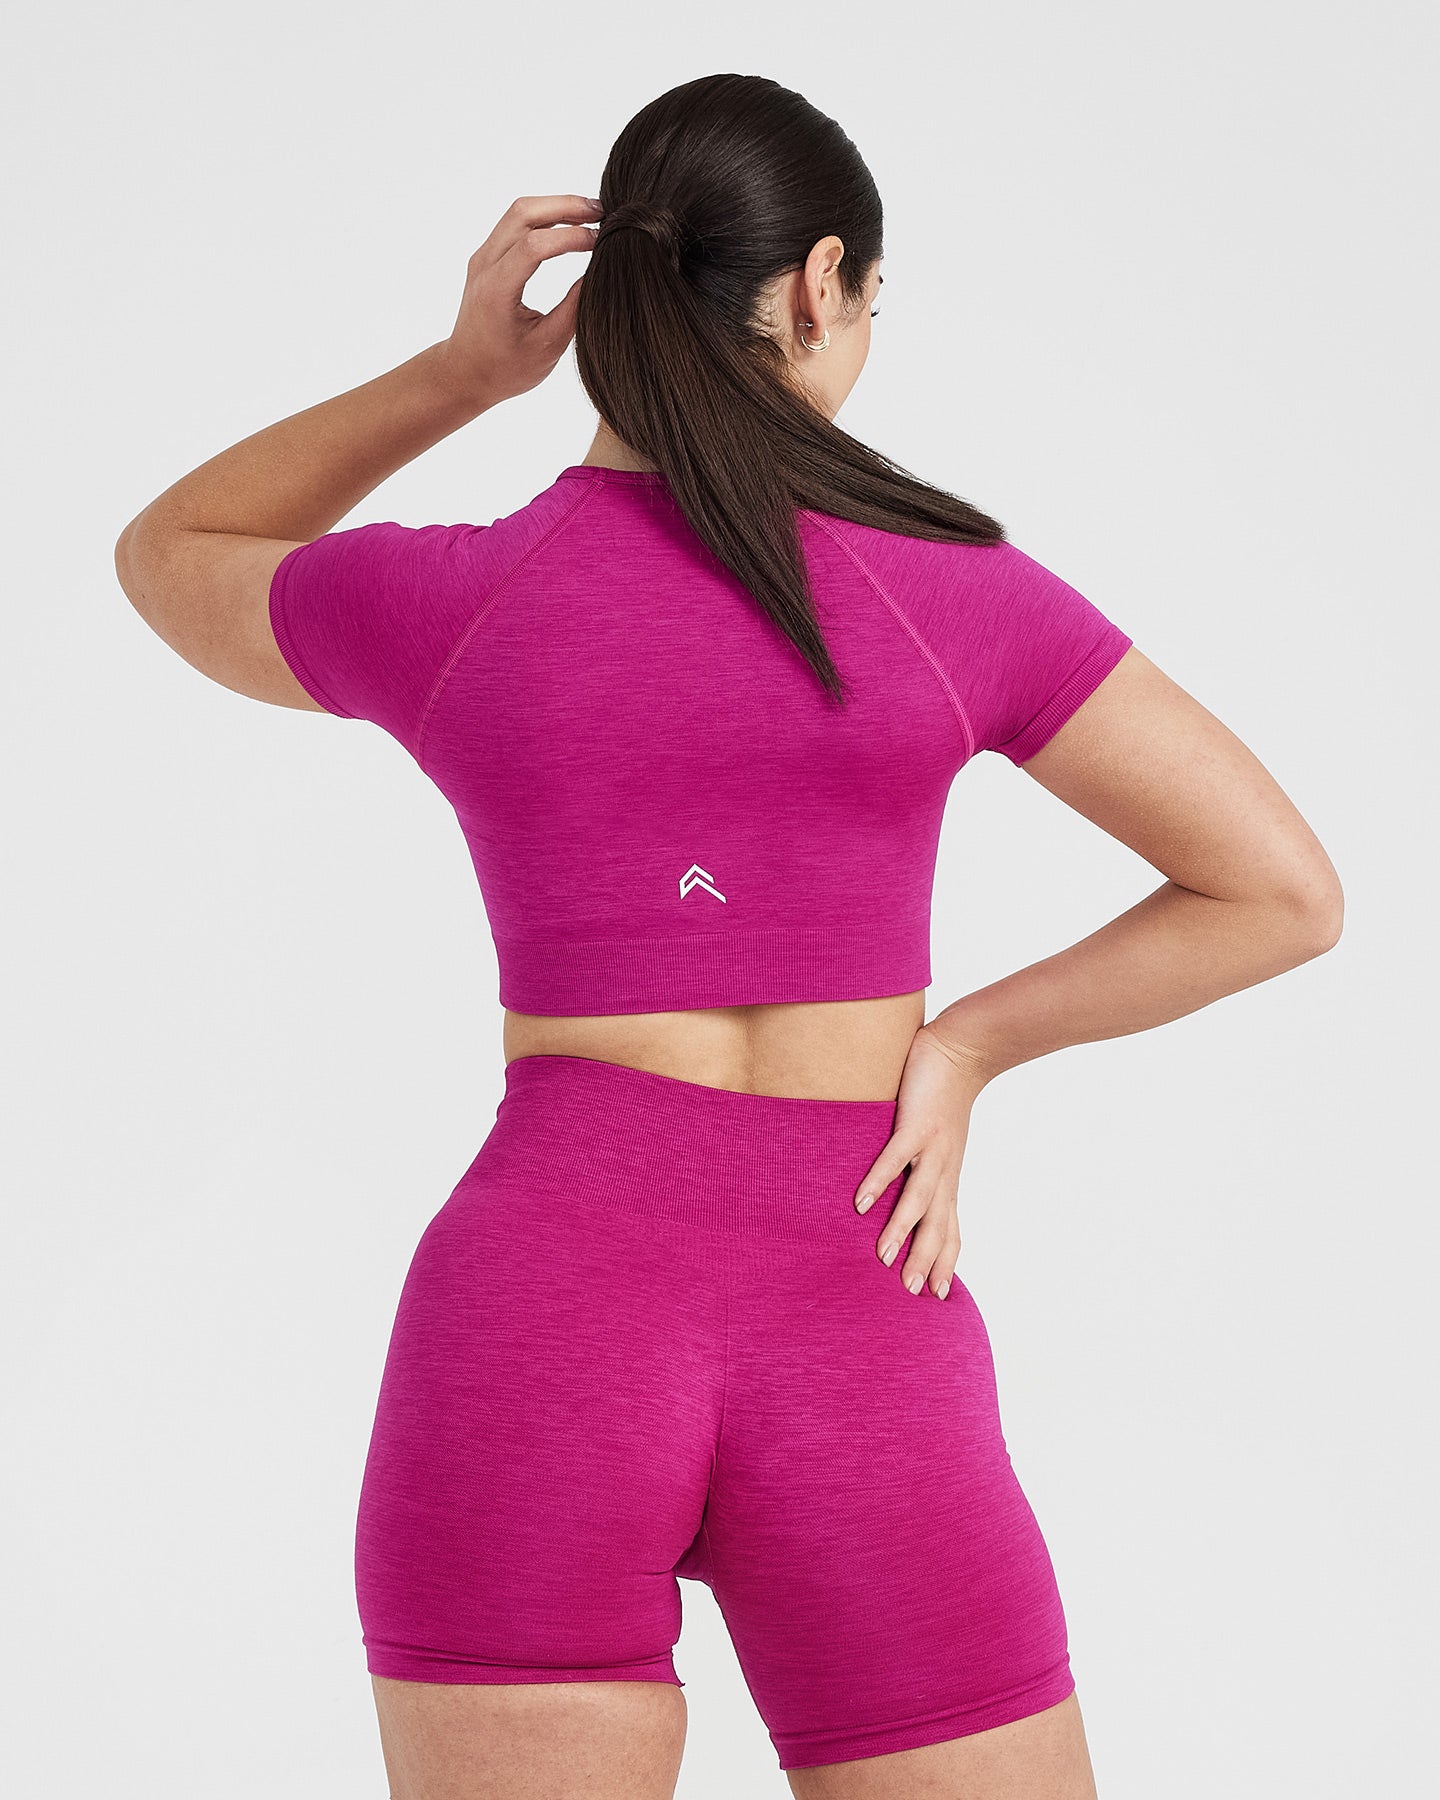 Fila Crop Workout Tank Top Shorts Set Fitness Running Athletic Gym Women's  XL - 791273103863